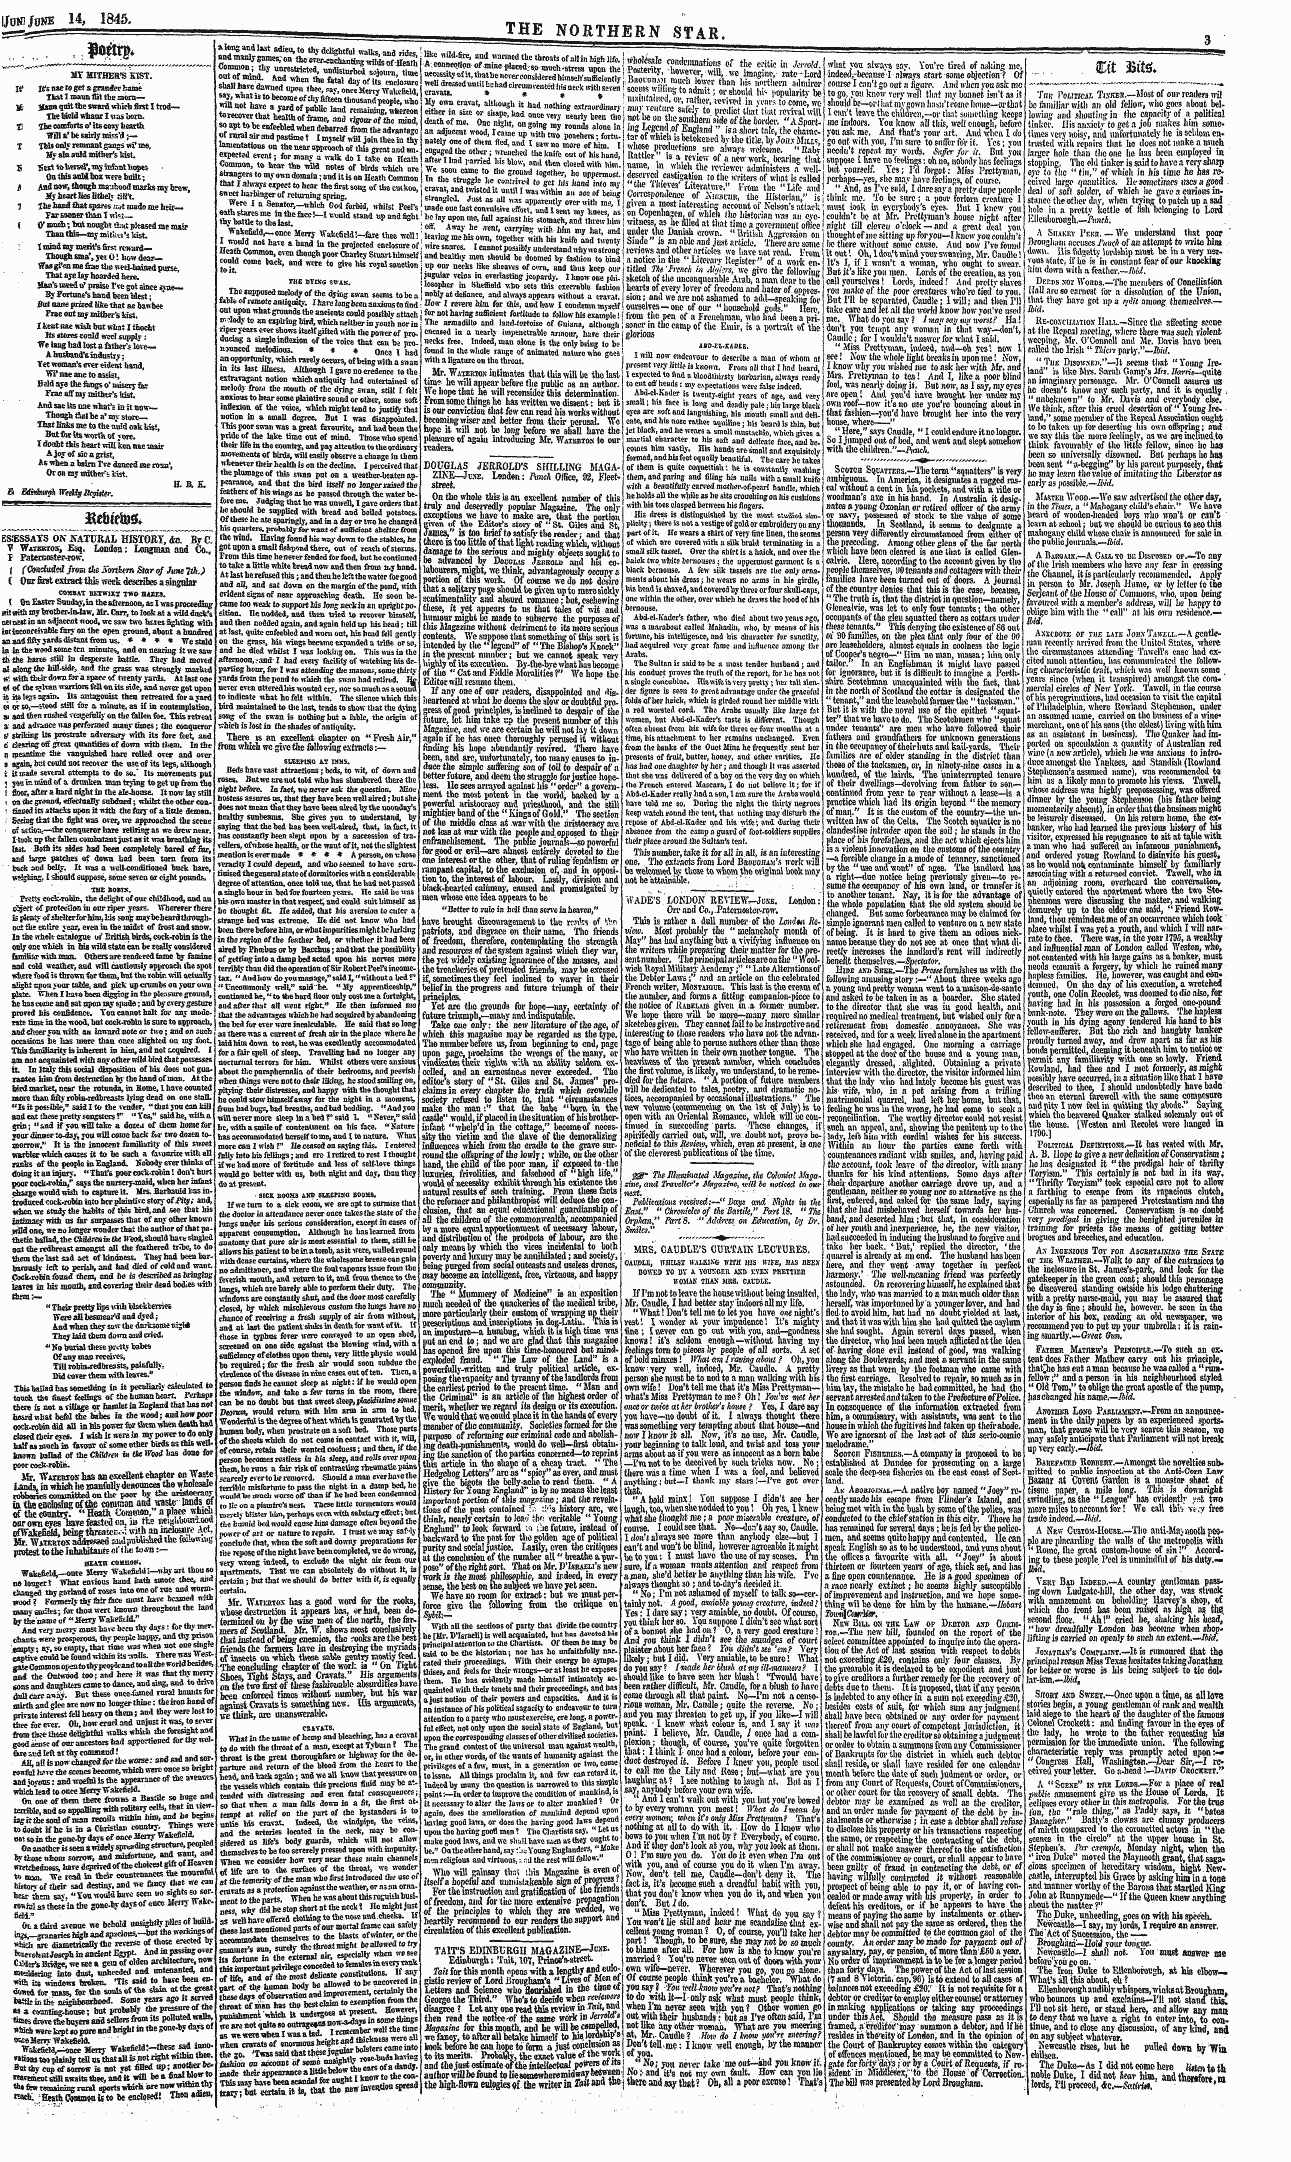 Northern Star (1837-1852): jS F Y, 3rd edition - \ Tait's Edinburgh Magazine*-Juse. Edinb...